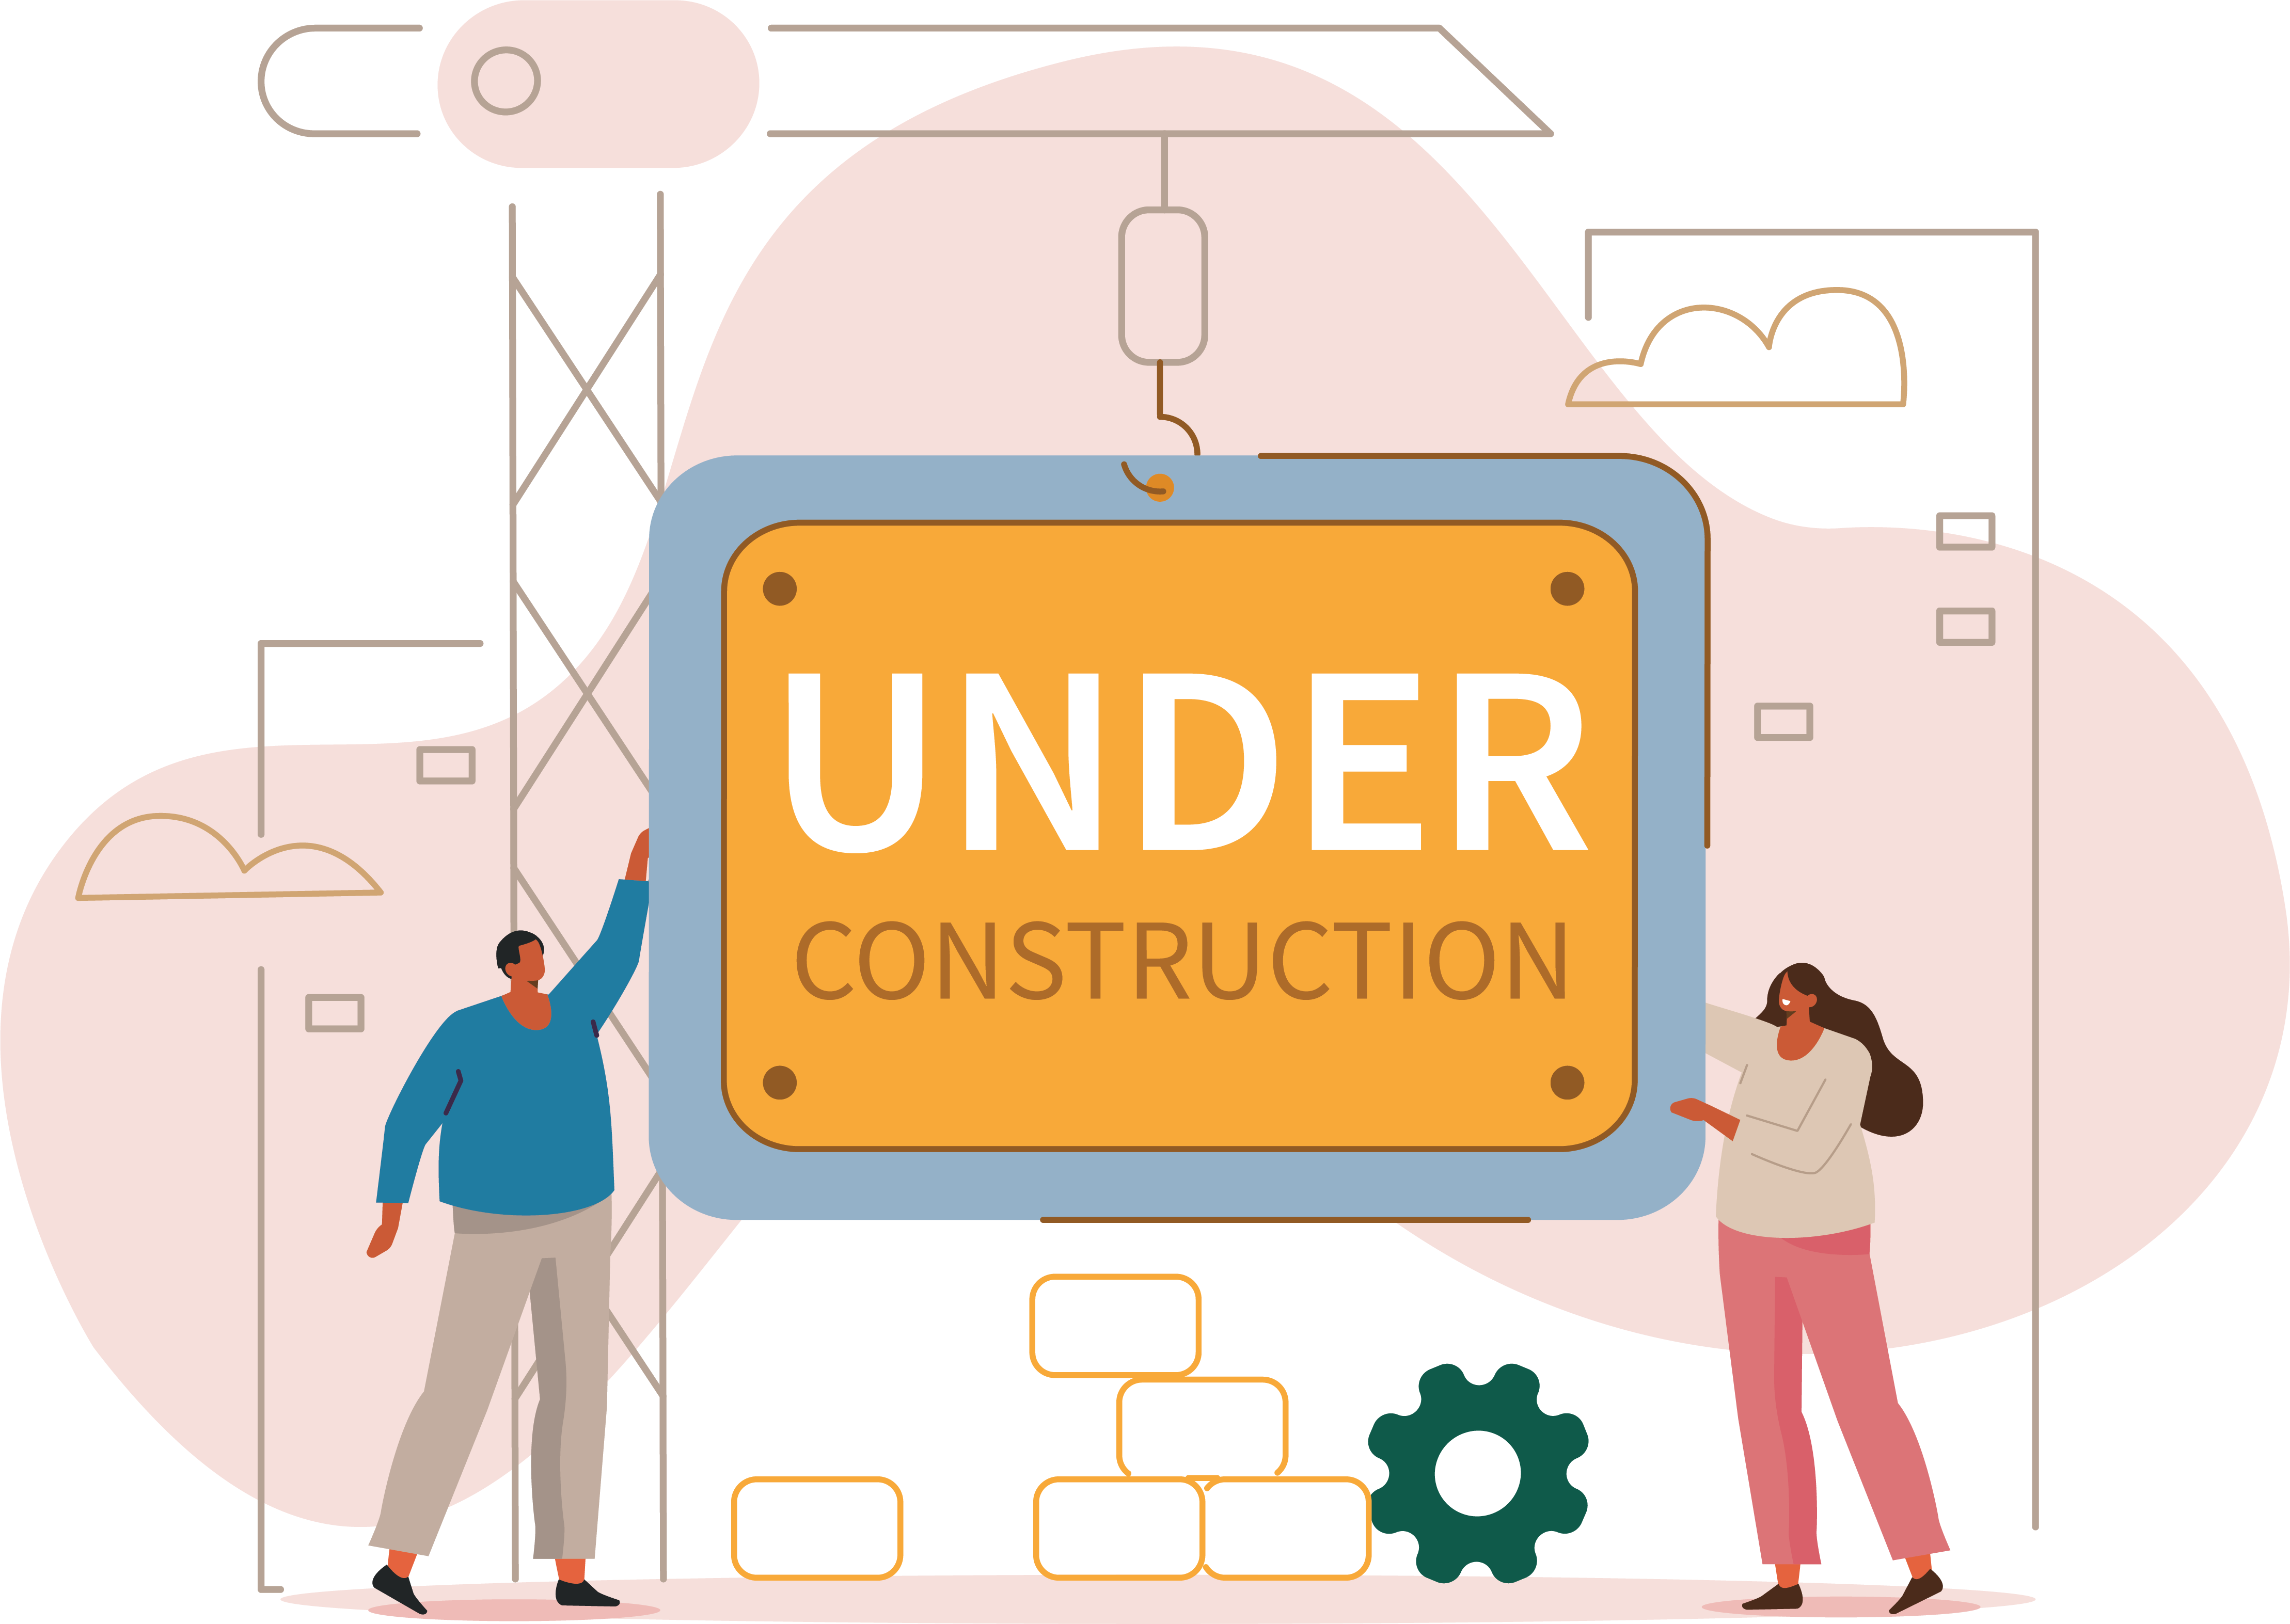 Under construction notice